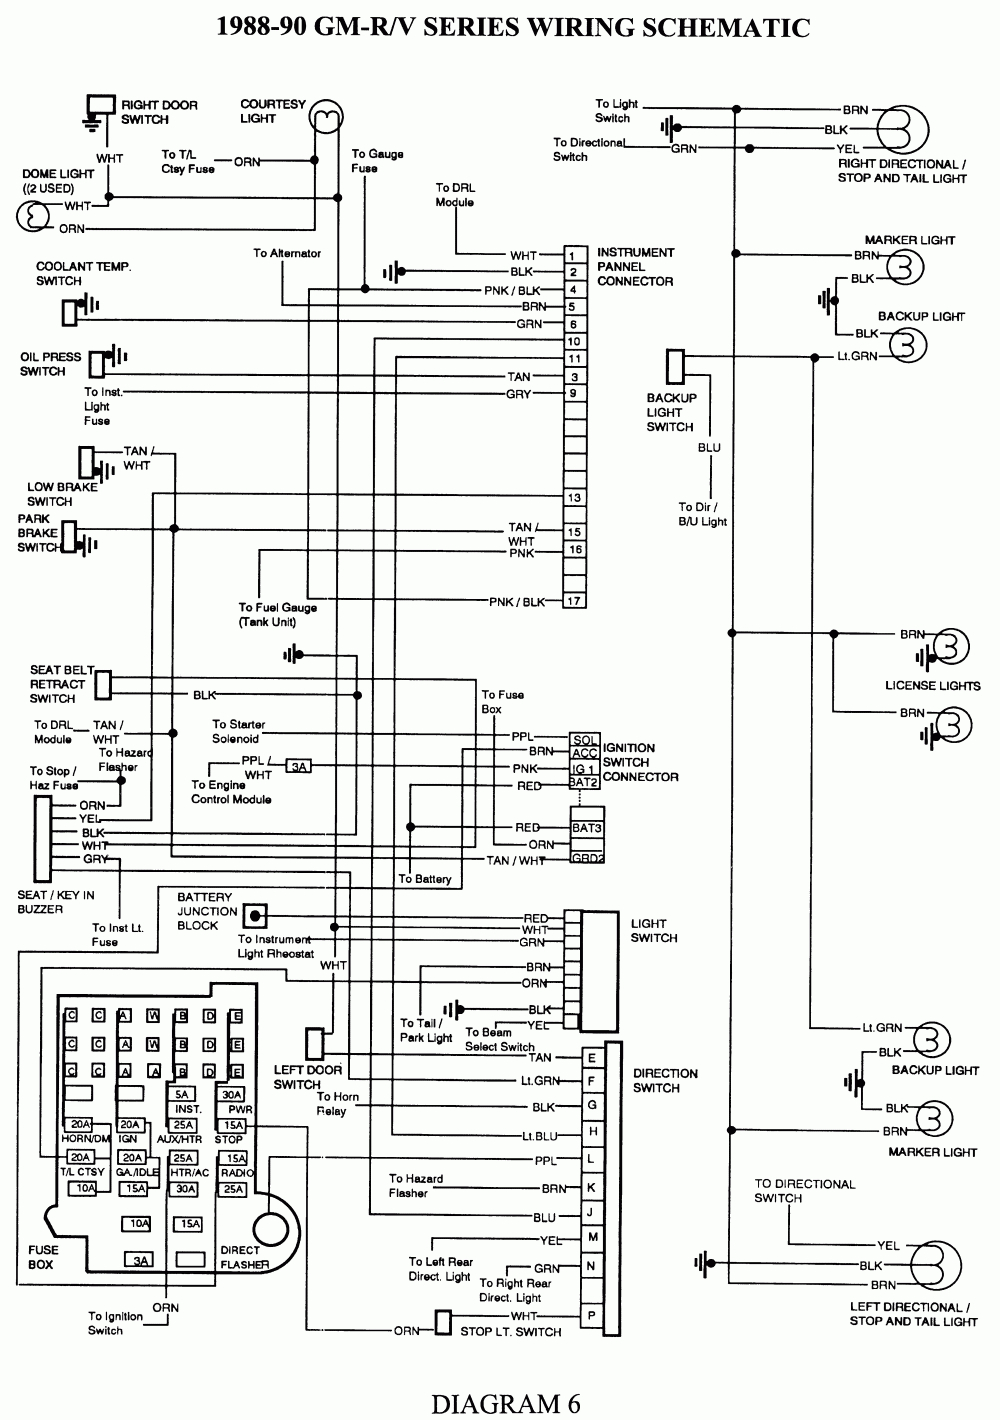 2003 Chevy Silverado Ignition Wiring Diagram - All Wiring Diagram Data - 2003 Chevy Silverado Wiring Diagram